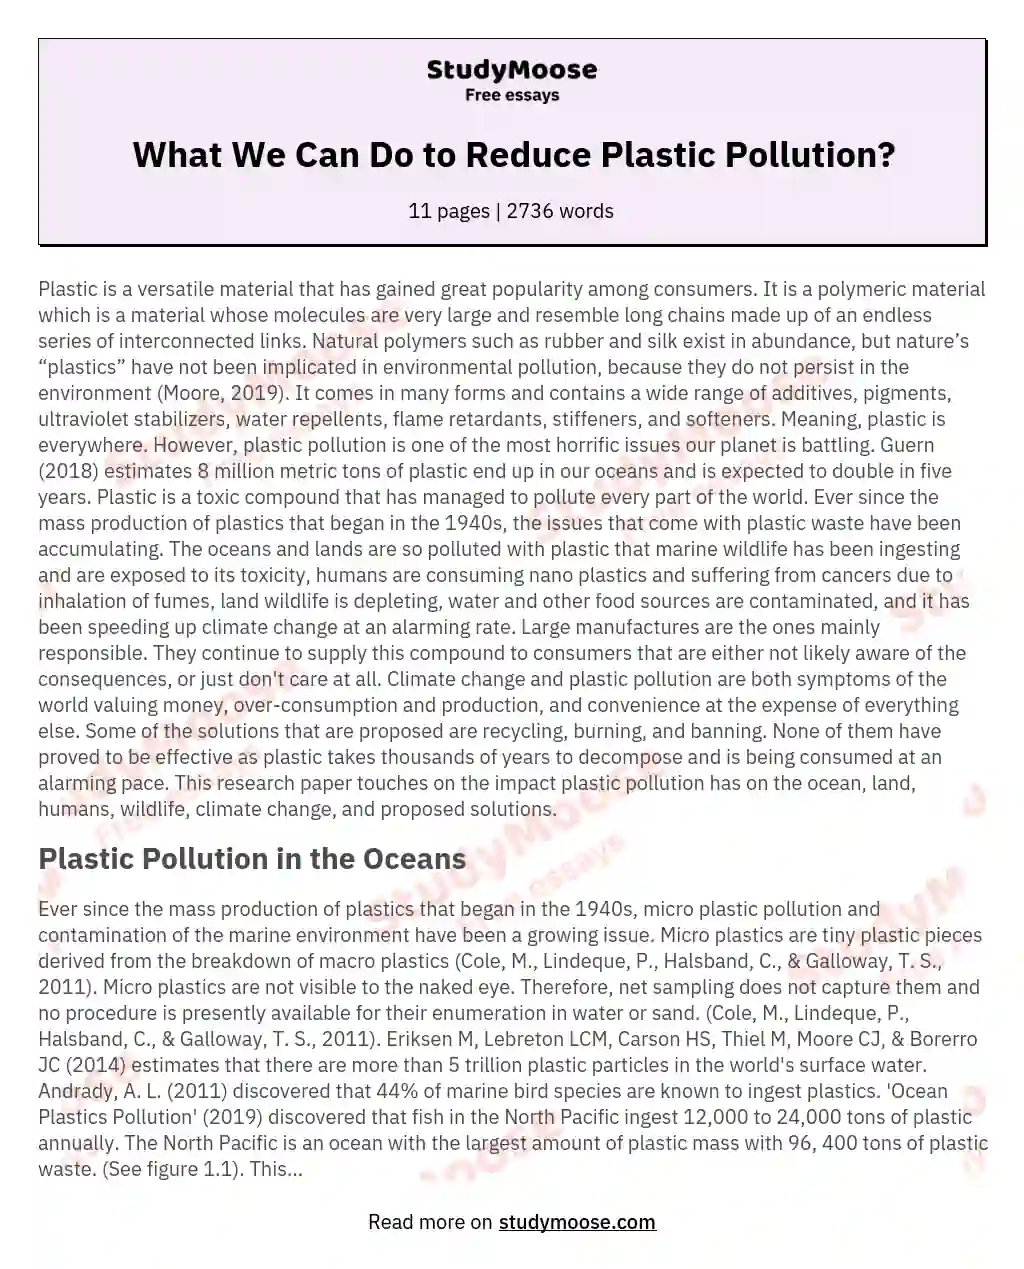 reduce pollution essay